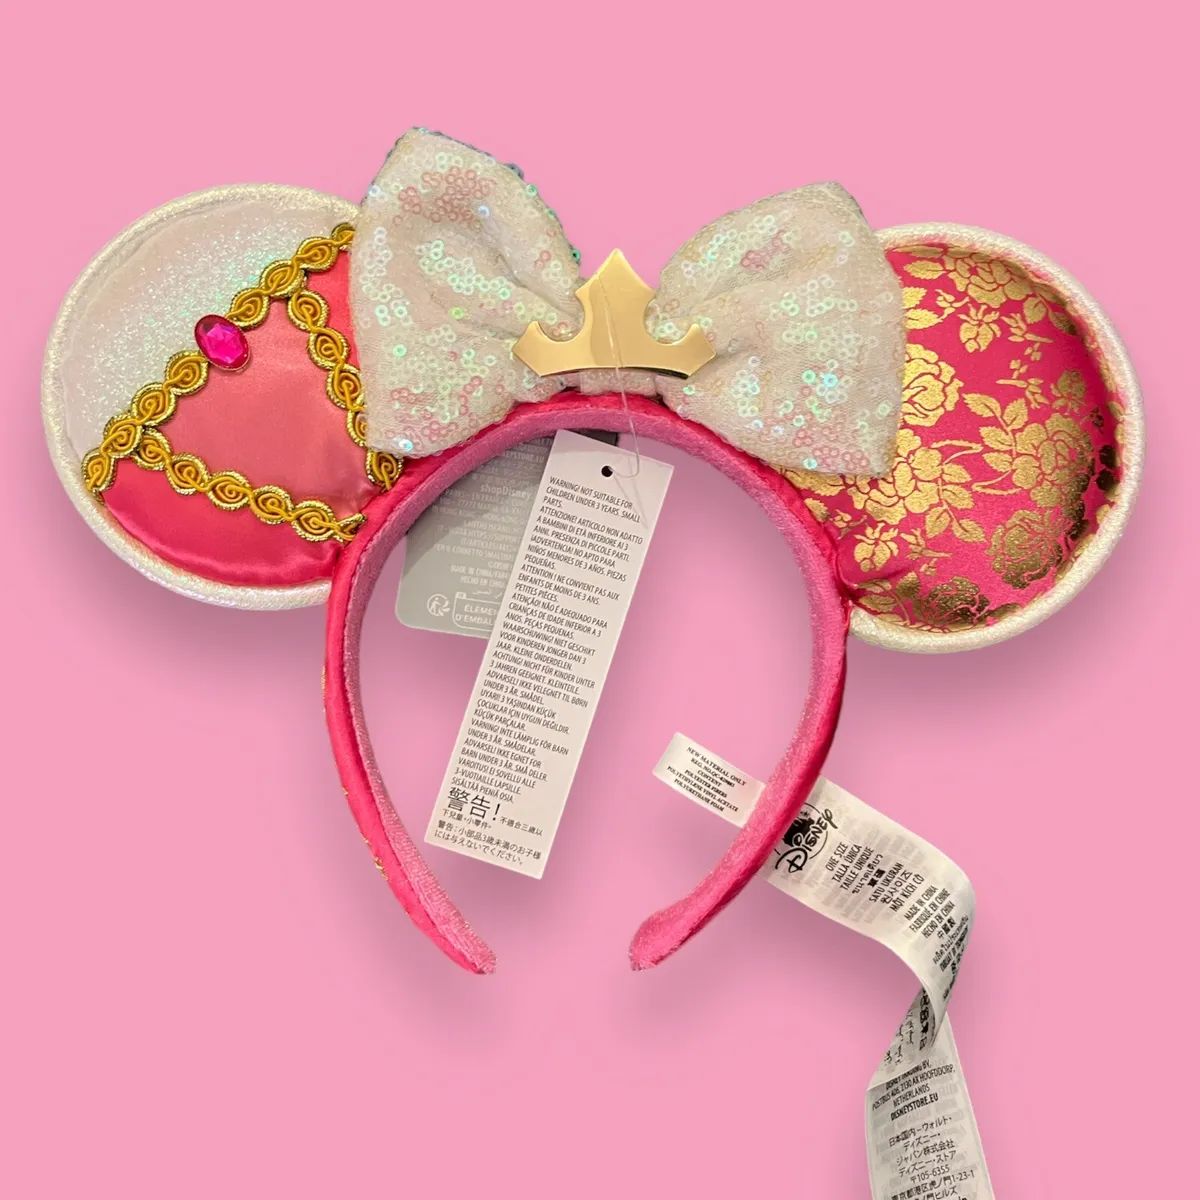 Disneyland Paris Sleeping Beauty exclusive Ears IN HAND READY TO SHIP  | eBay | eBay US